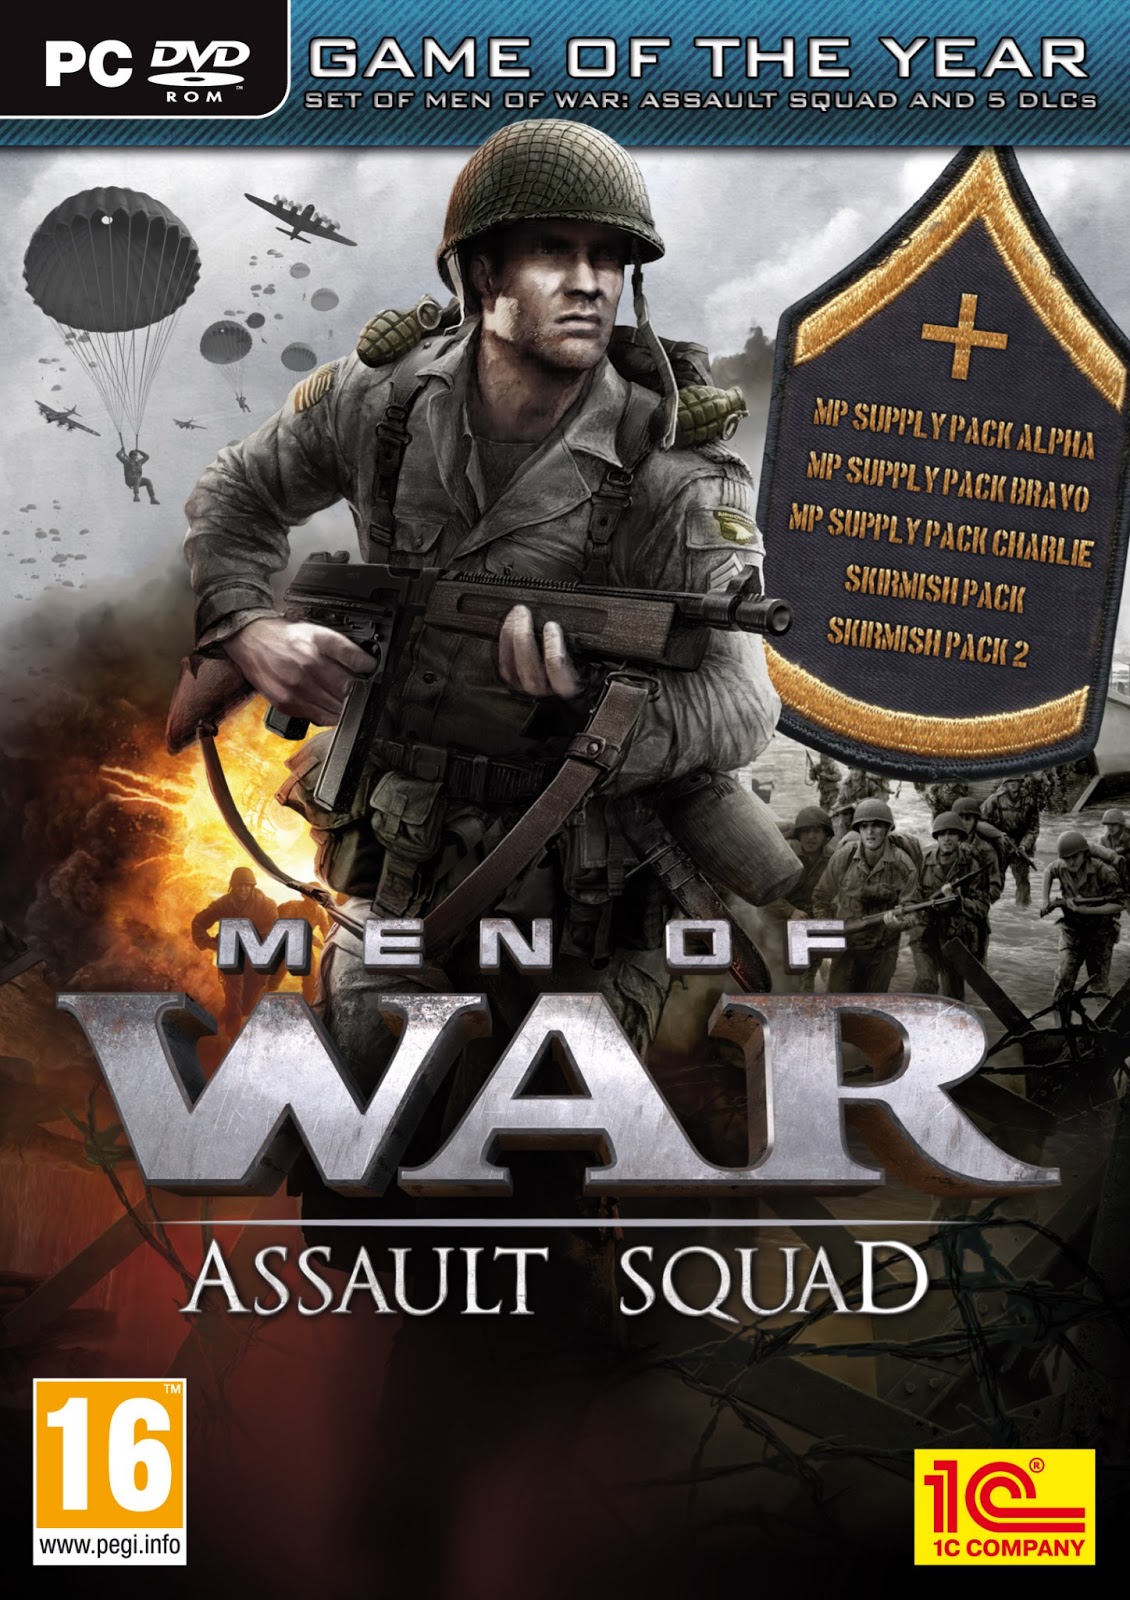 men of war 2 multiplayer game modes